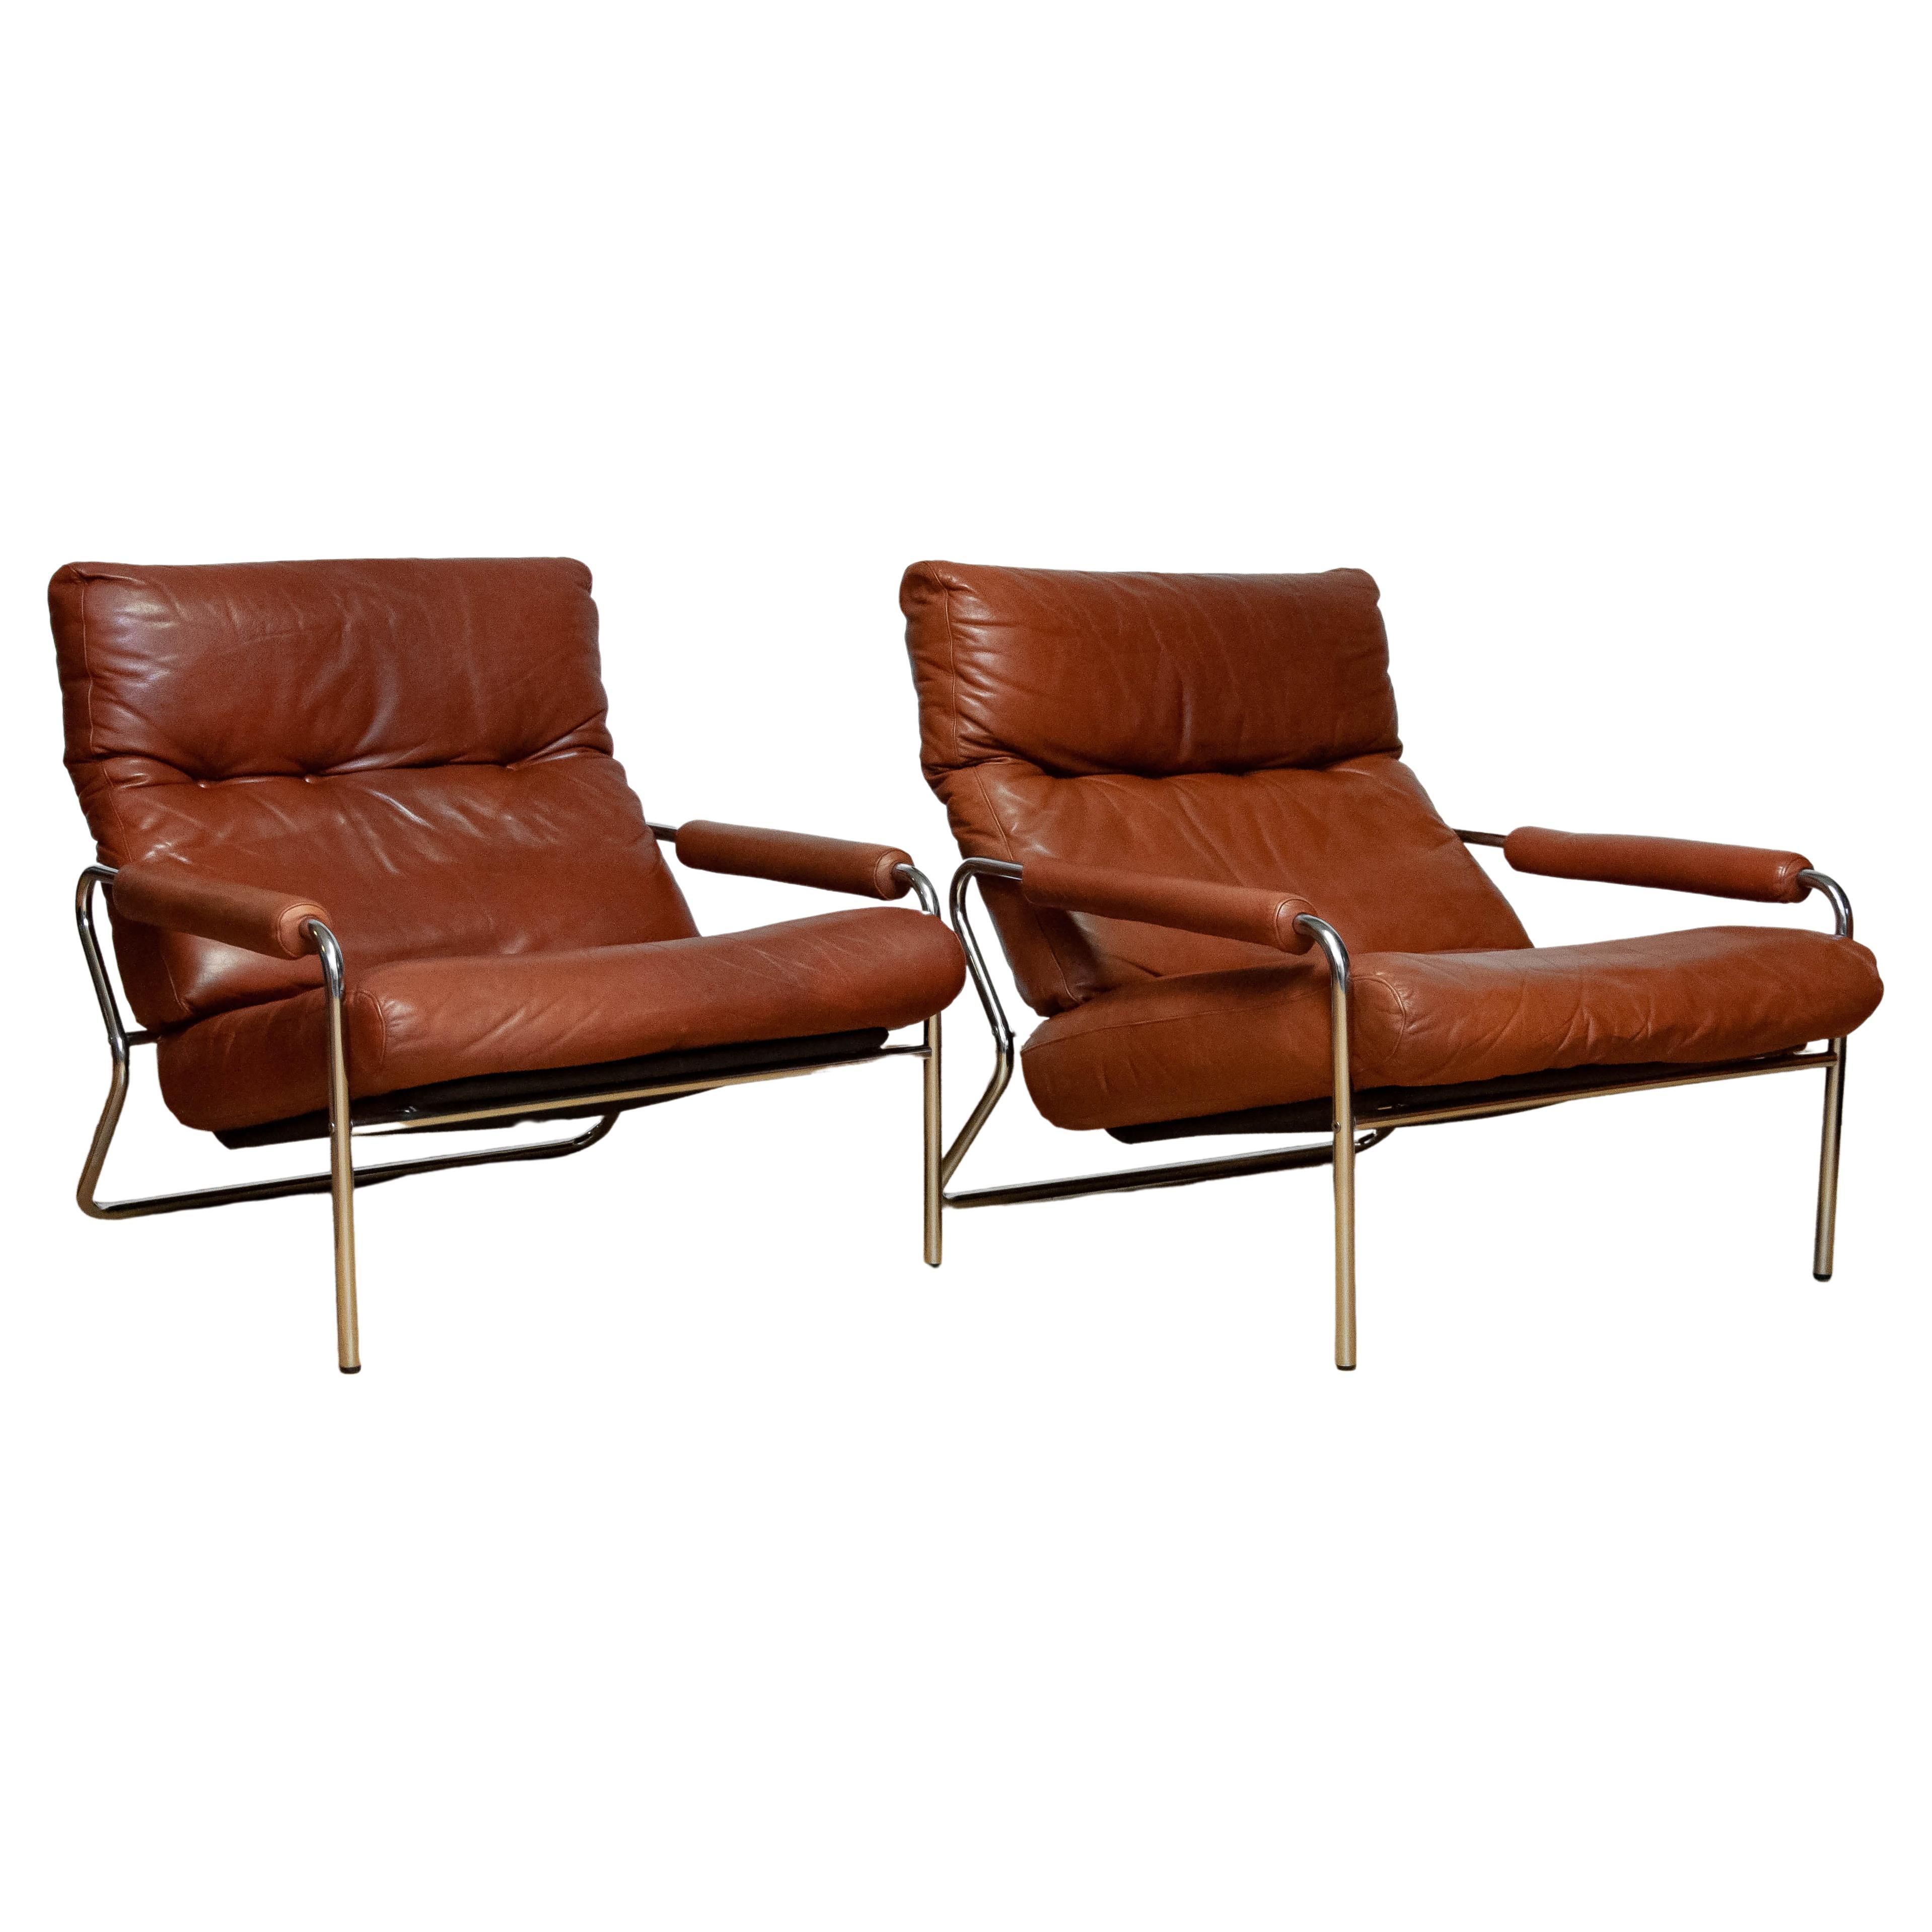 1960s Pair Scandinavian Modern Tubular Chrome And Brown Leather Lounge Chairs